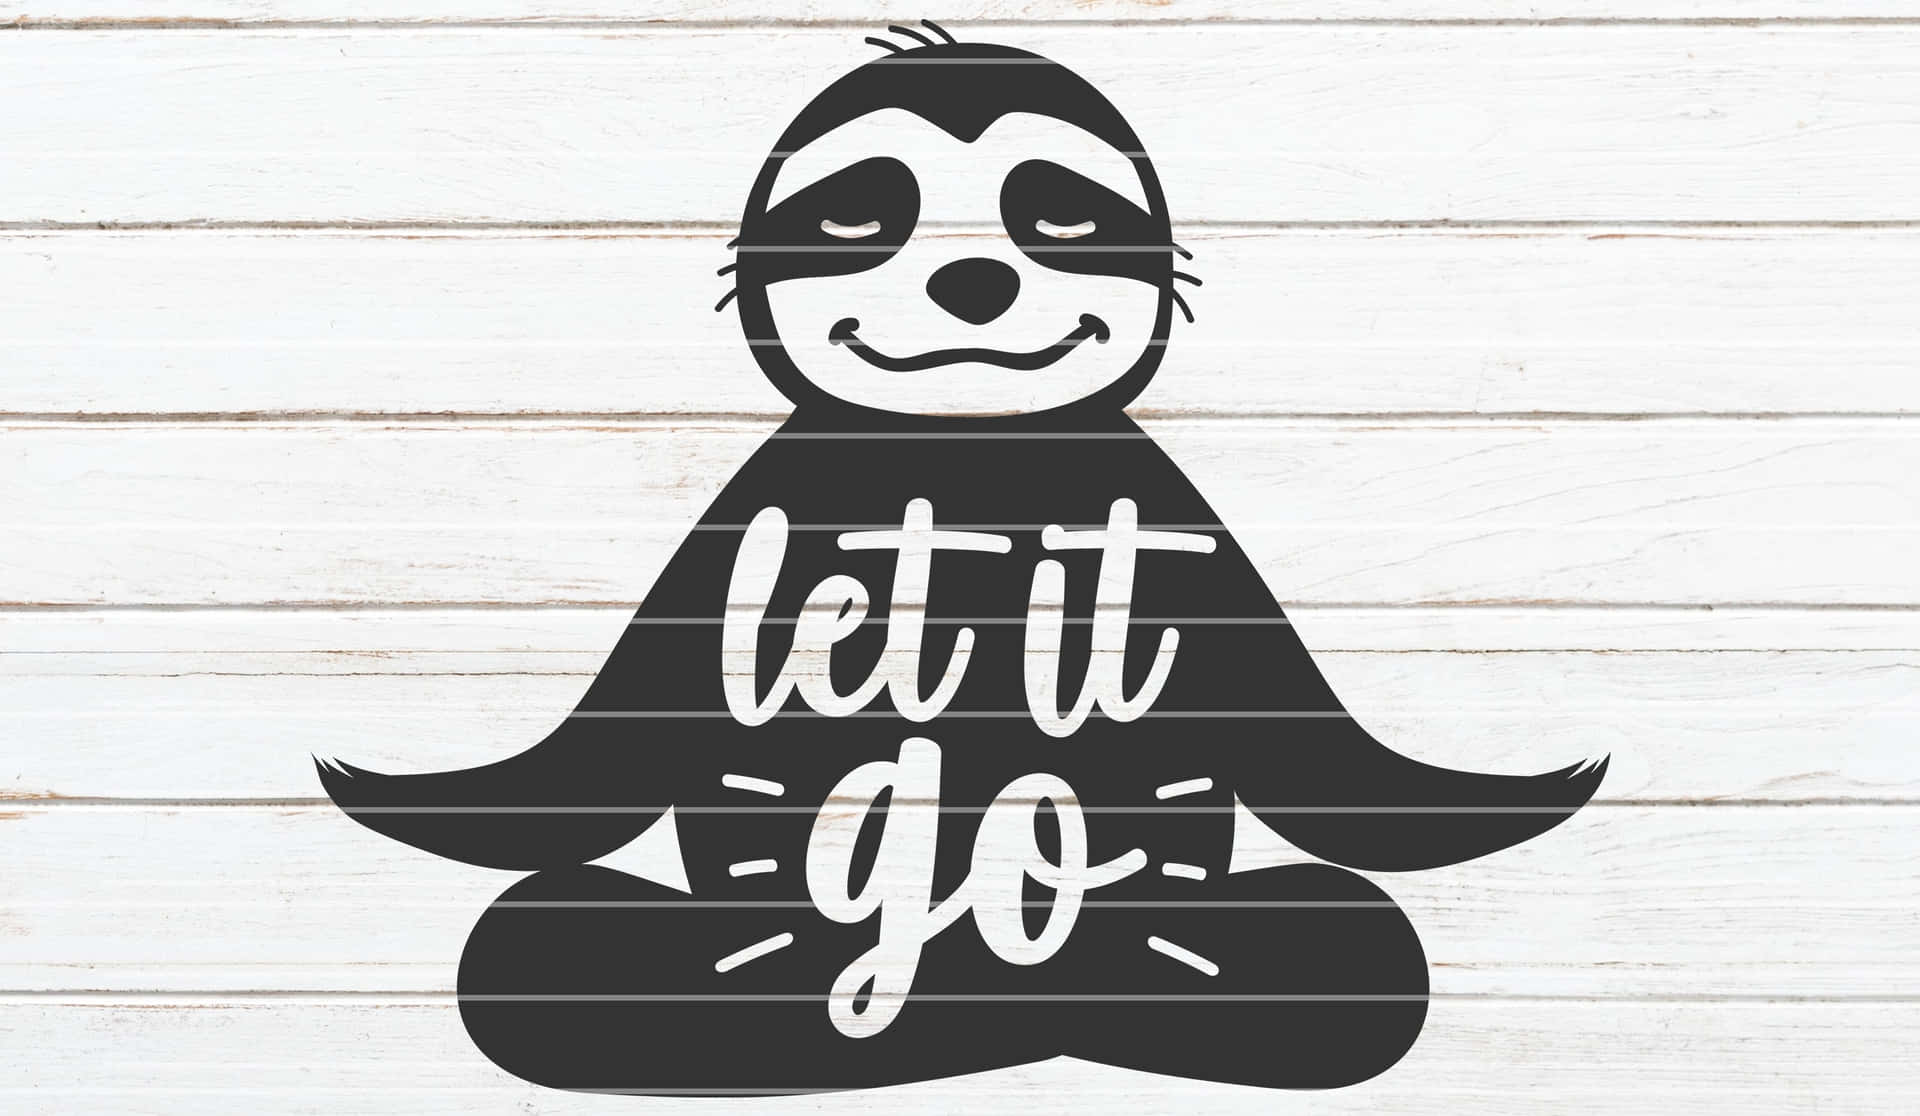 Let It Go Sloth Wallpaper